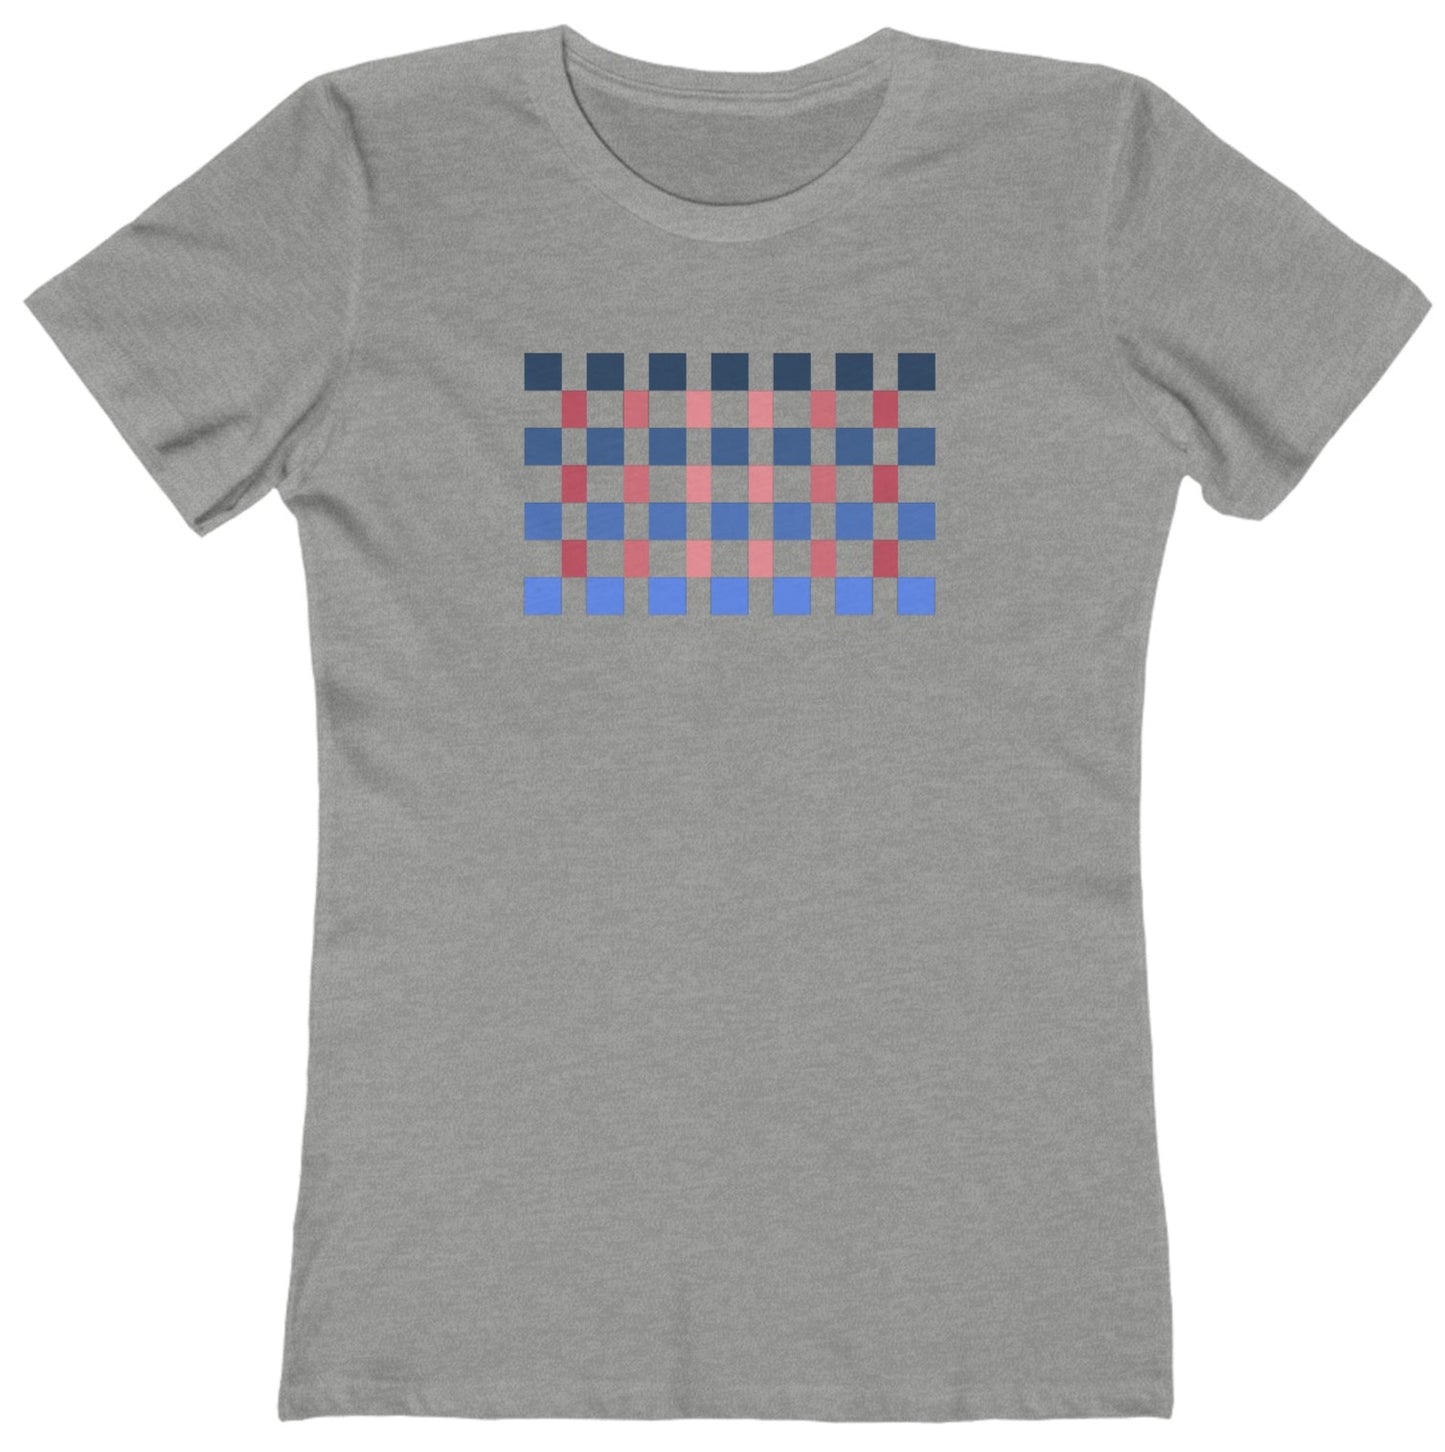 Grid - Women's T-Shirt